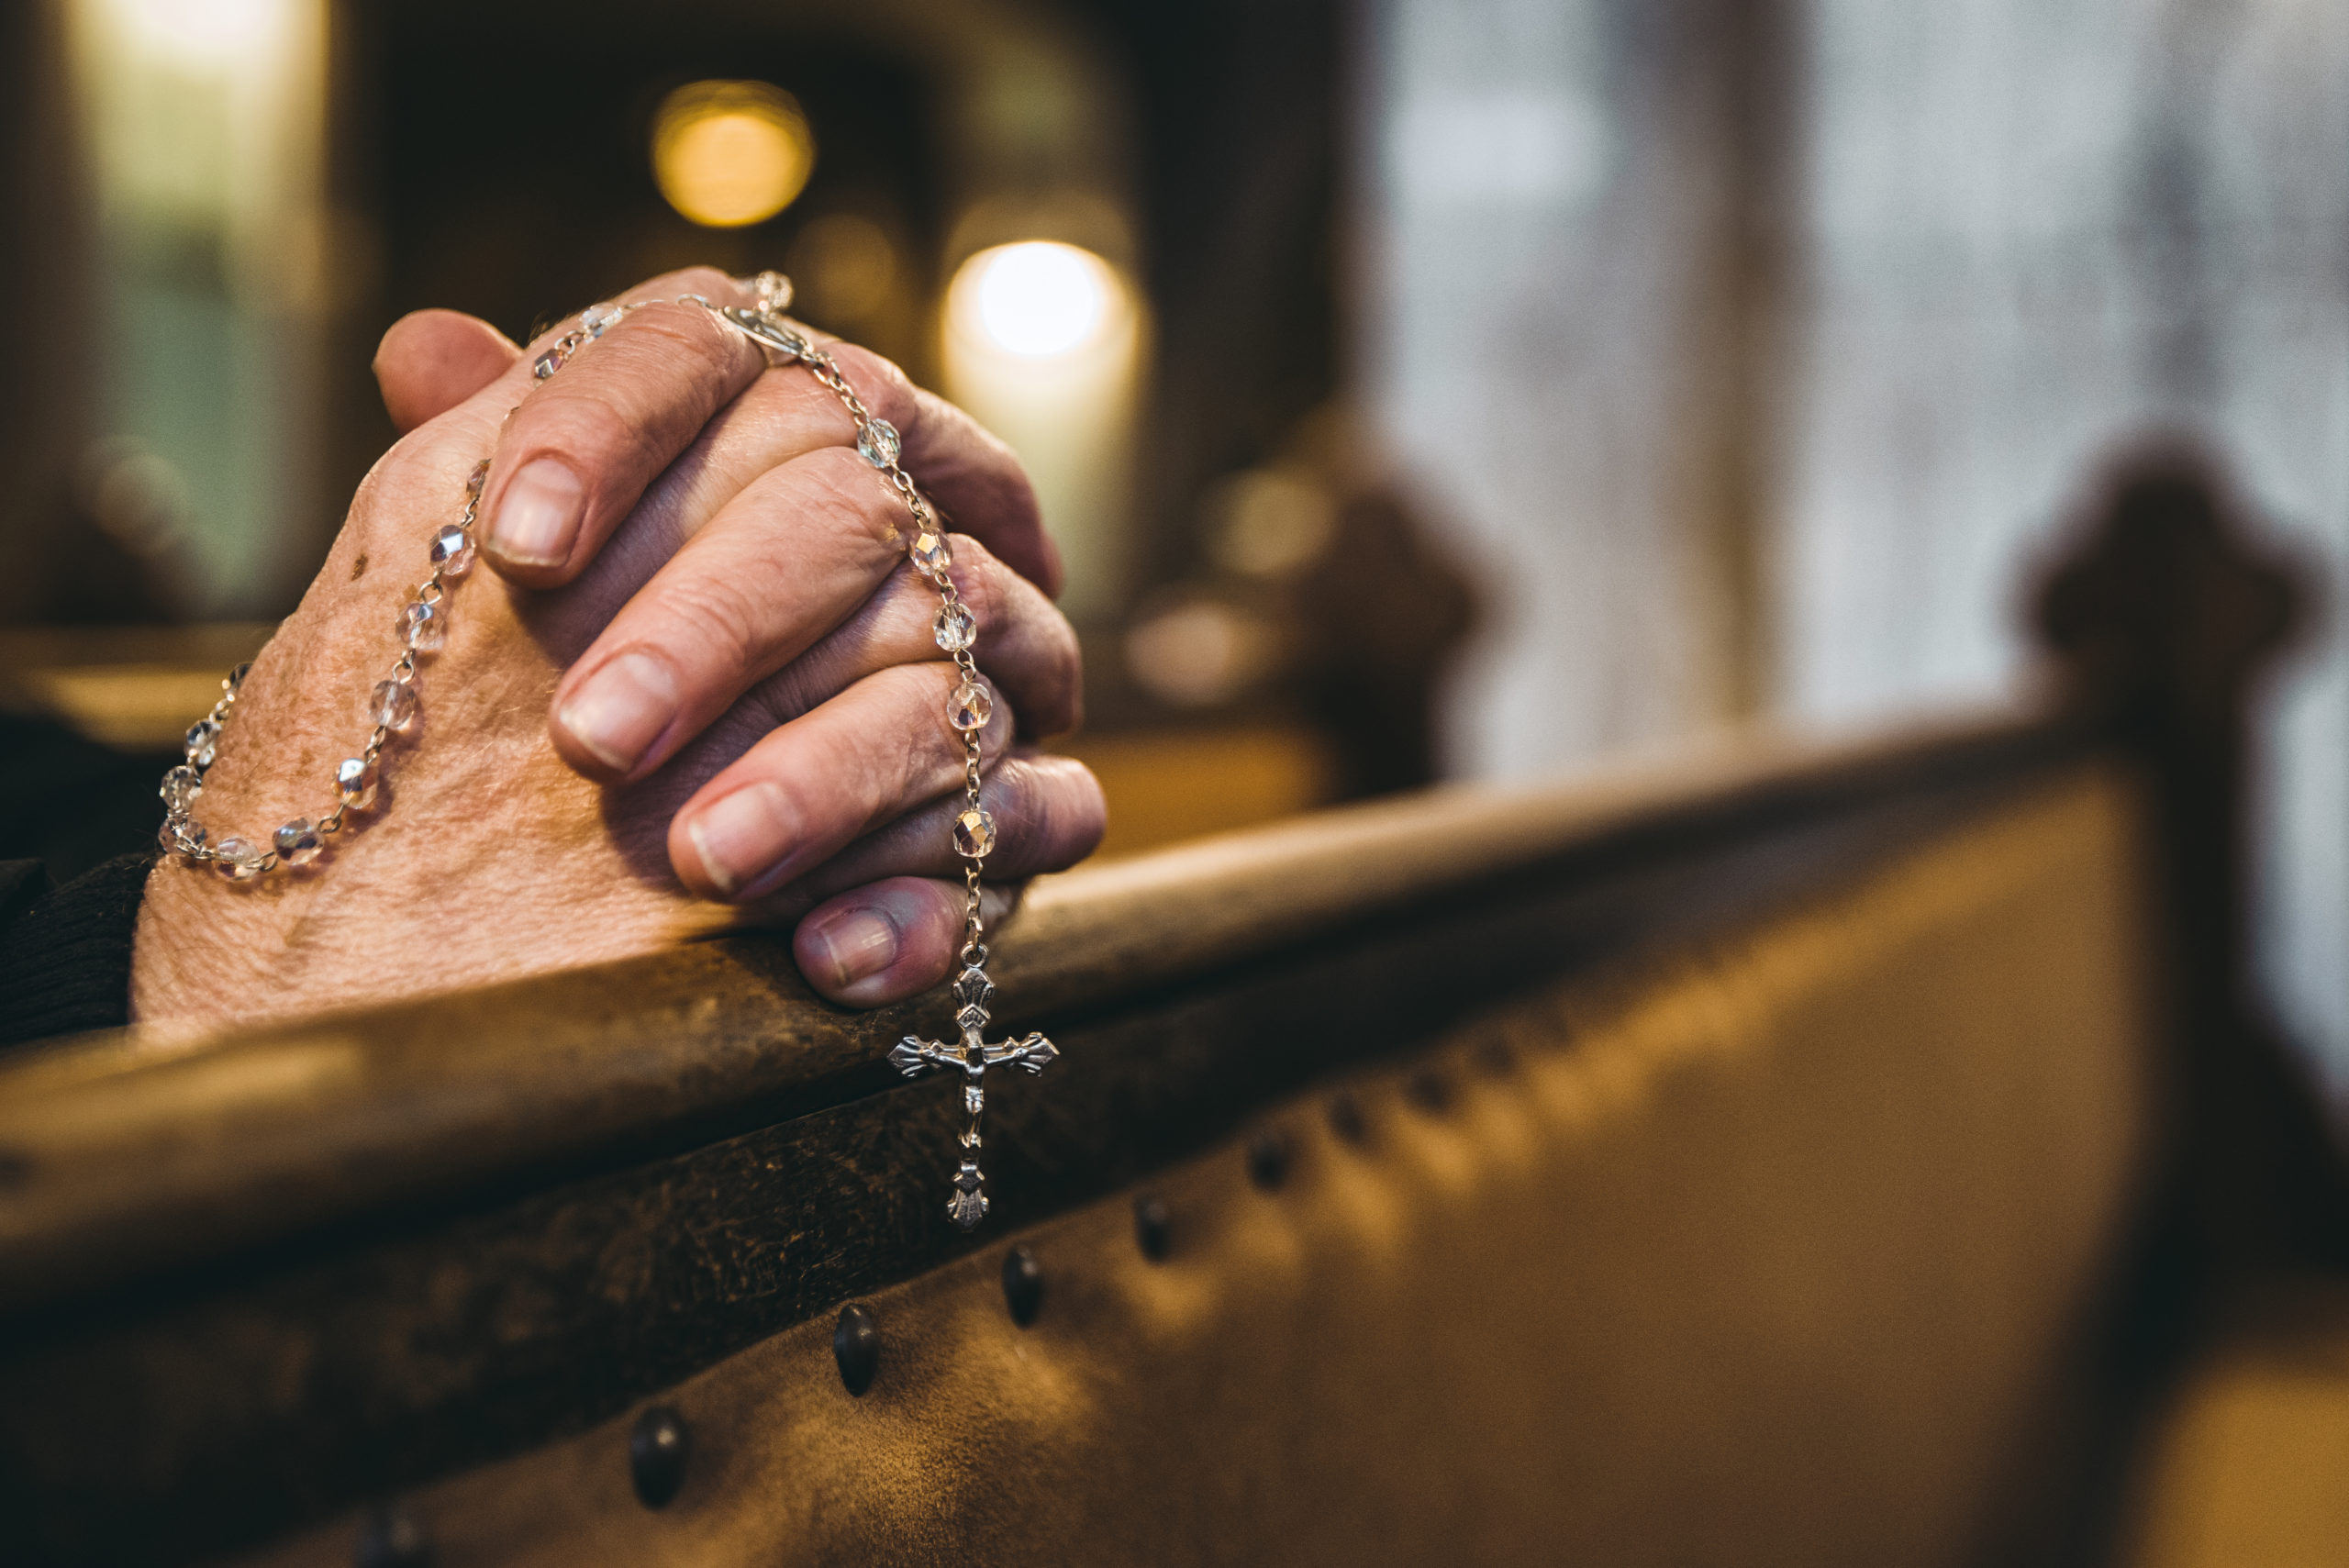 Senior Living Resources for Christian and Catholic Seniors